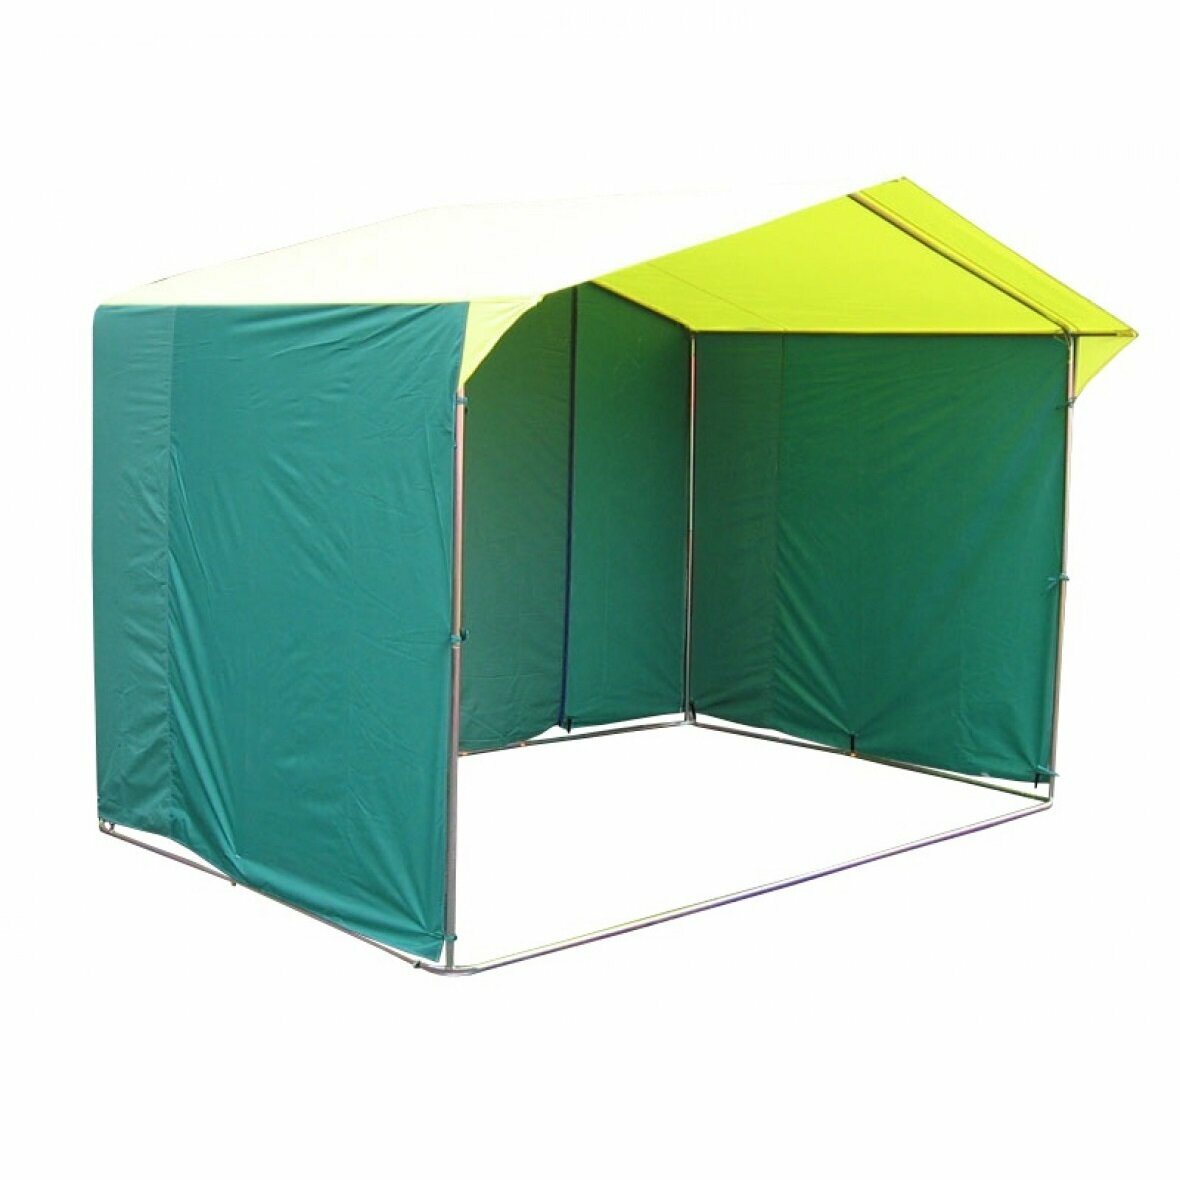 Палатка Митек "Домик" 2.5 х 2,0 (каркас из трубы Ø 25 мм) желто-зеленый